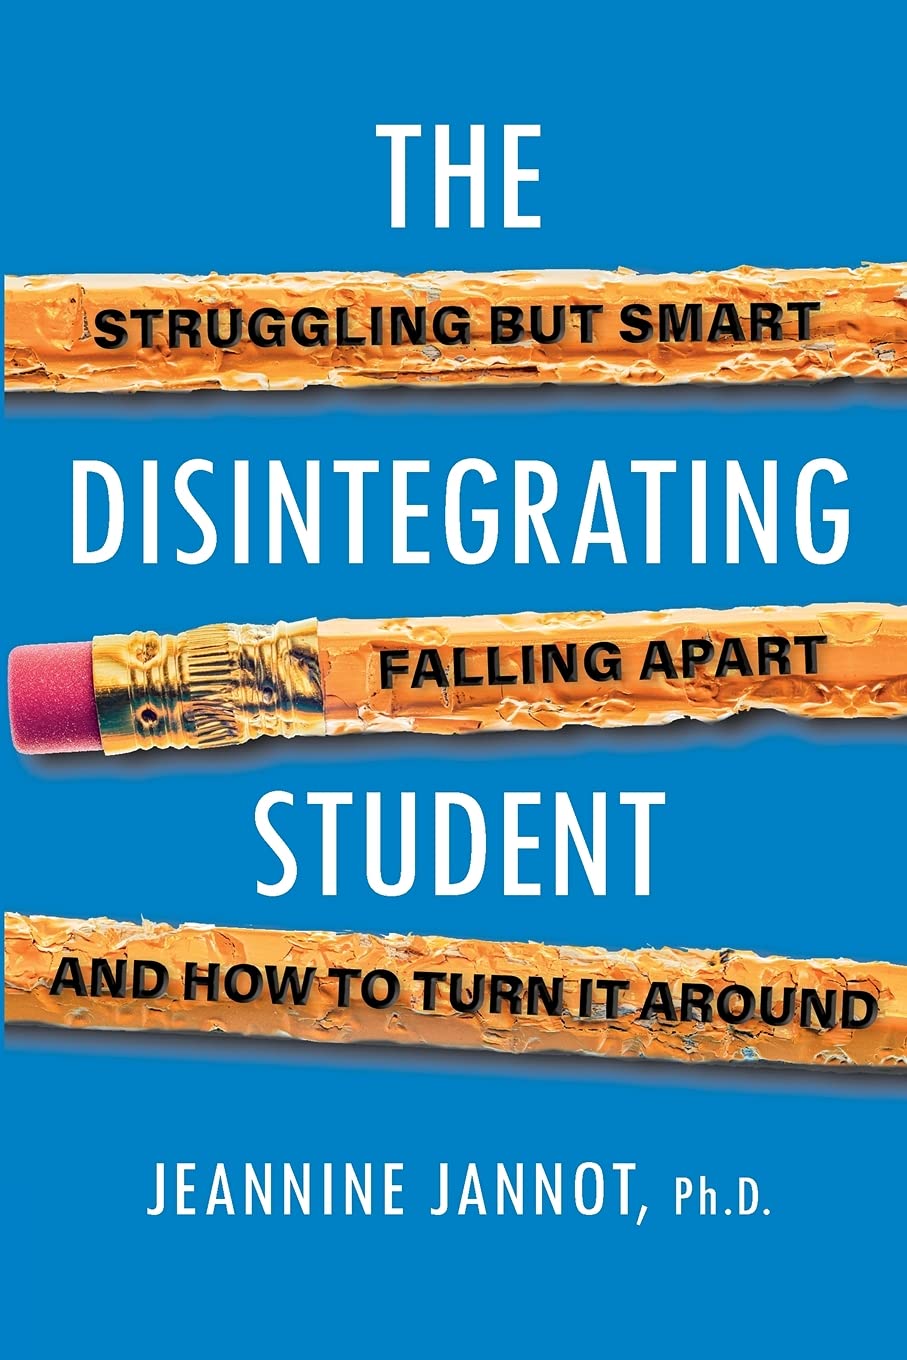 The Disintegrating Student